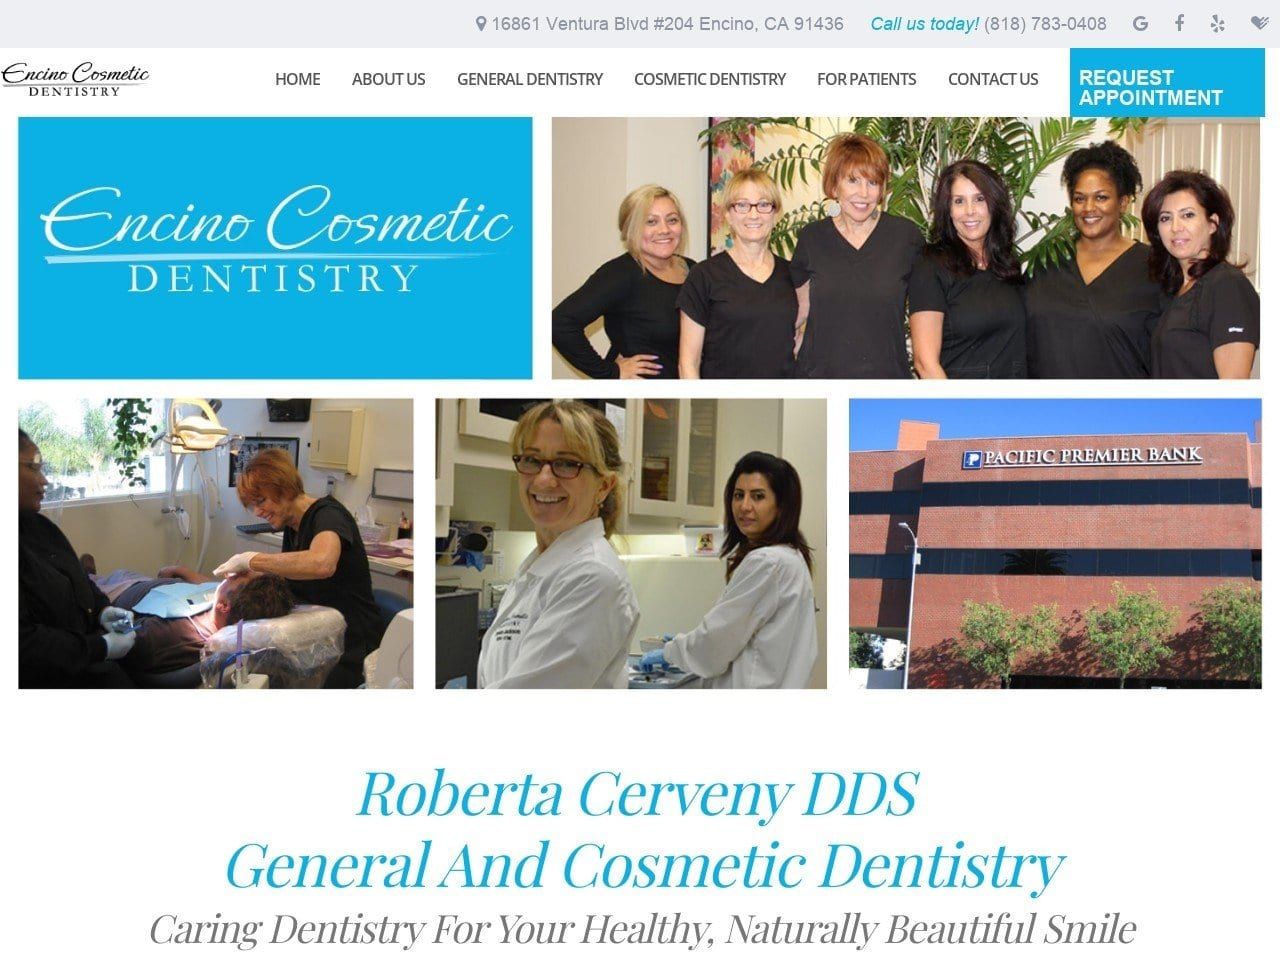 Roberta Cerveny DDS Inc. Website Screenshot from encinocosmeticdentistry.com